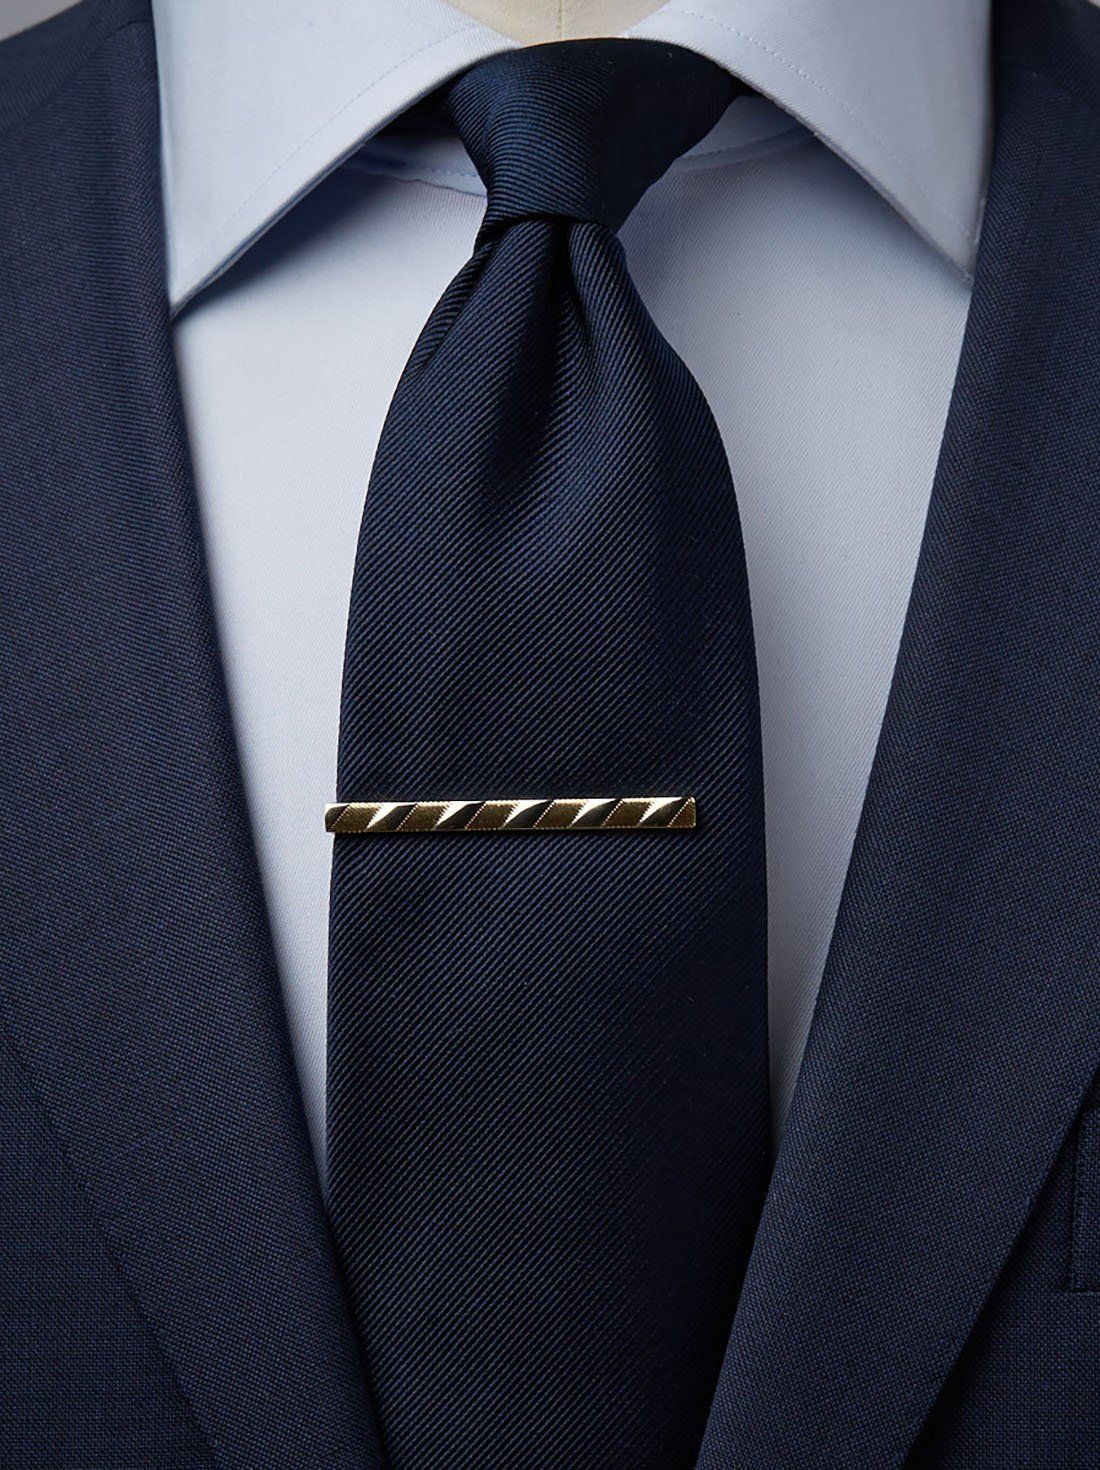 Gold Tie Clip Drew